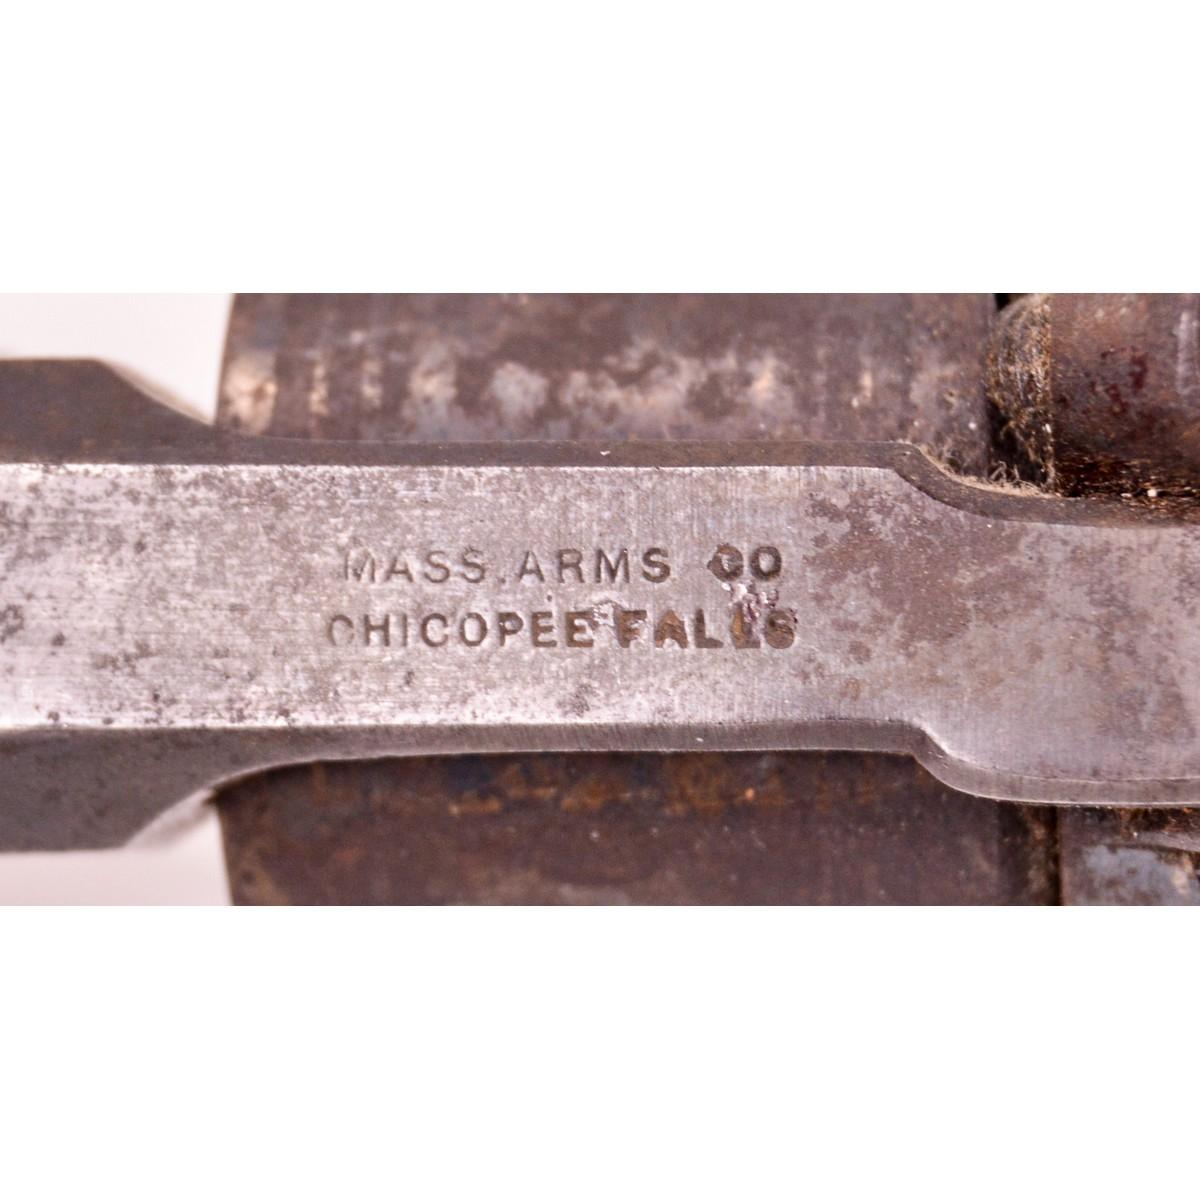 Mass. Arms Co. Maynard Pocket Revolver .28 Cal (A)